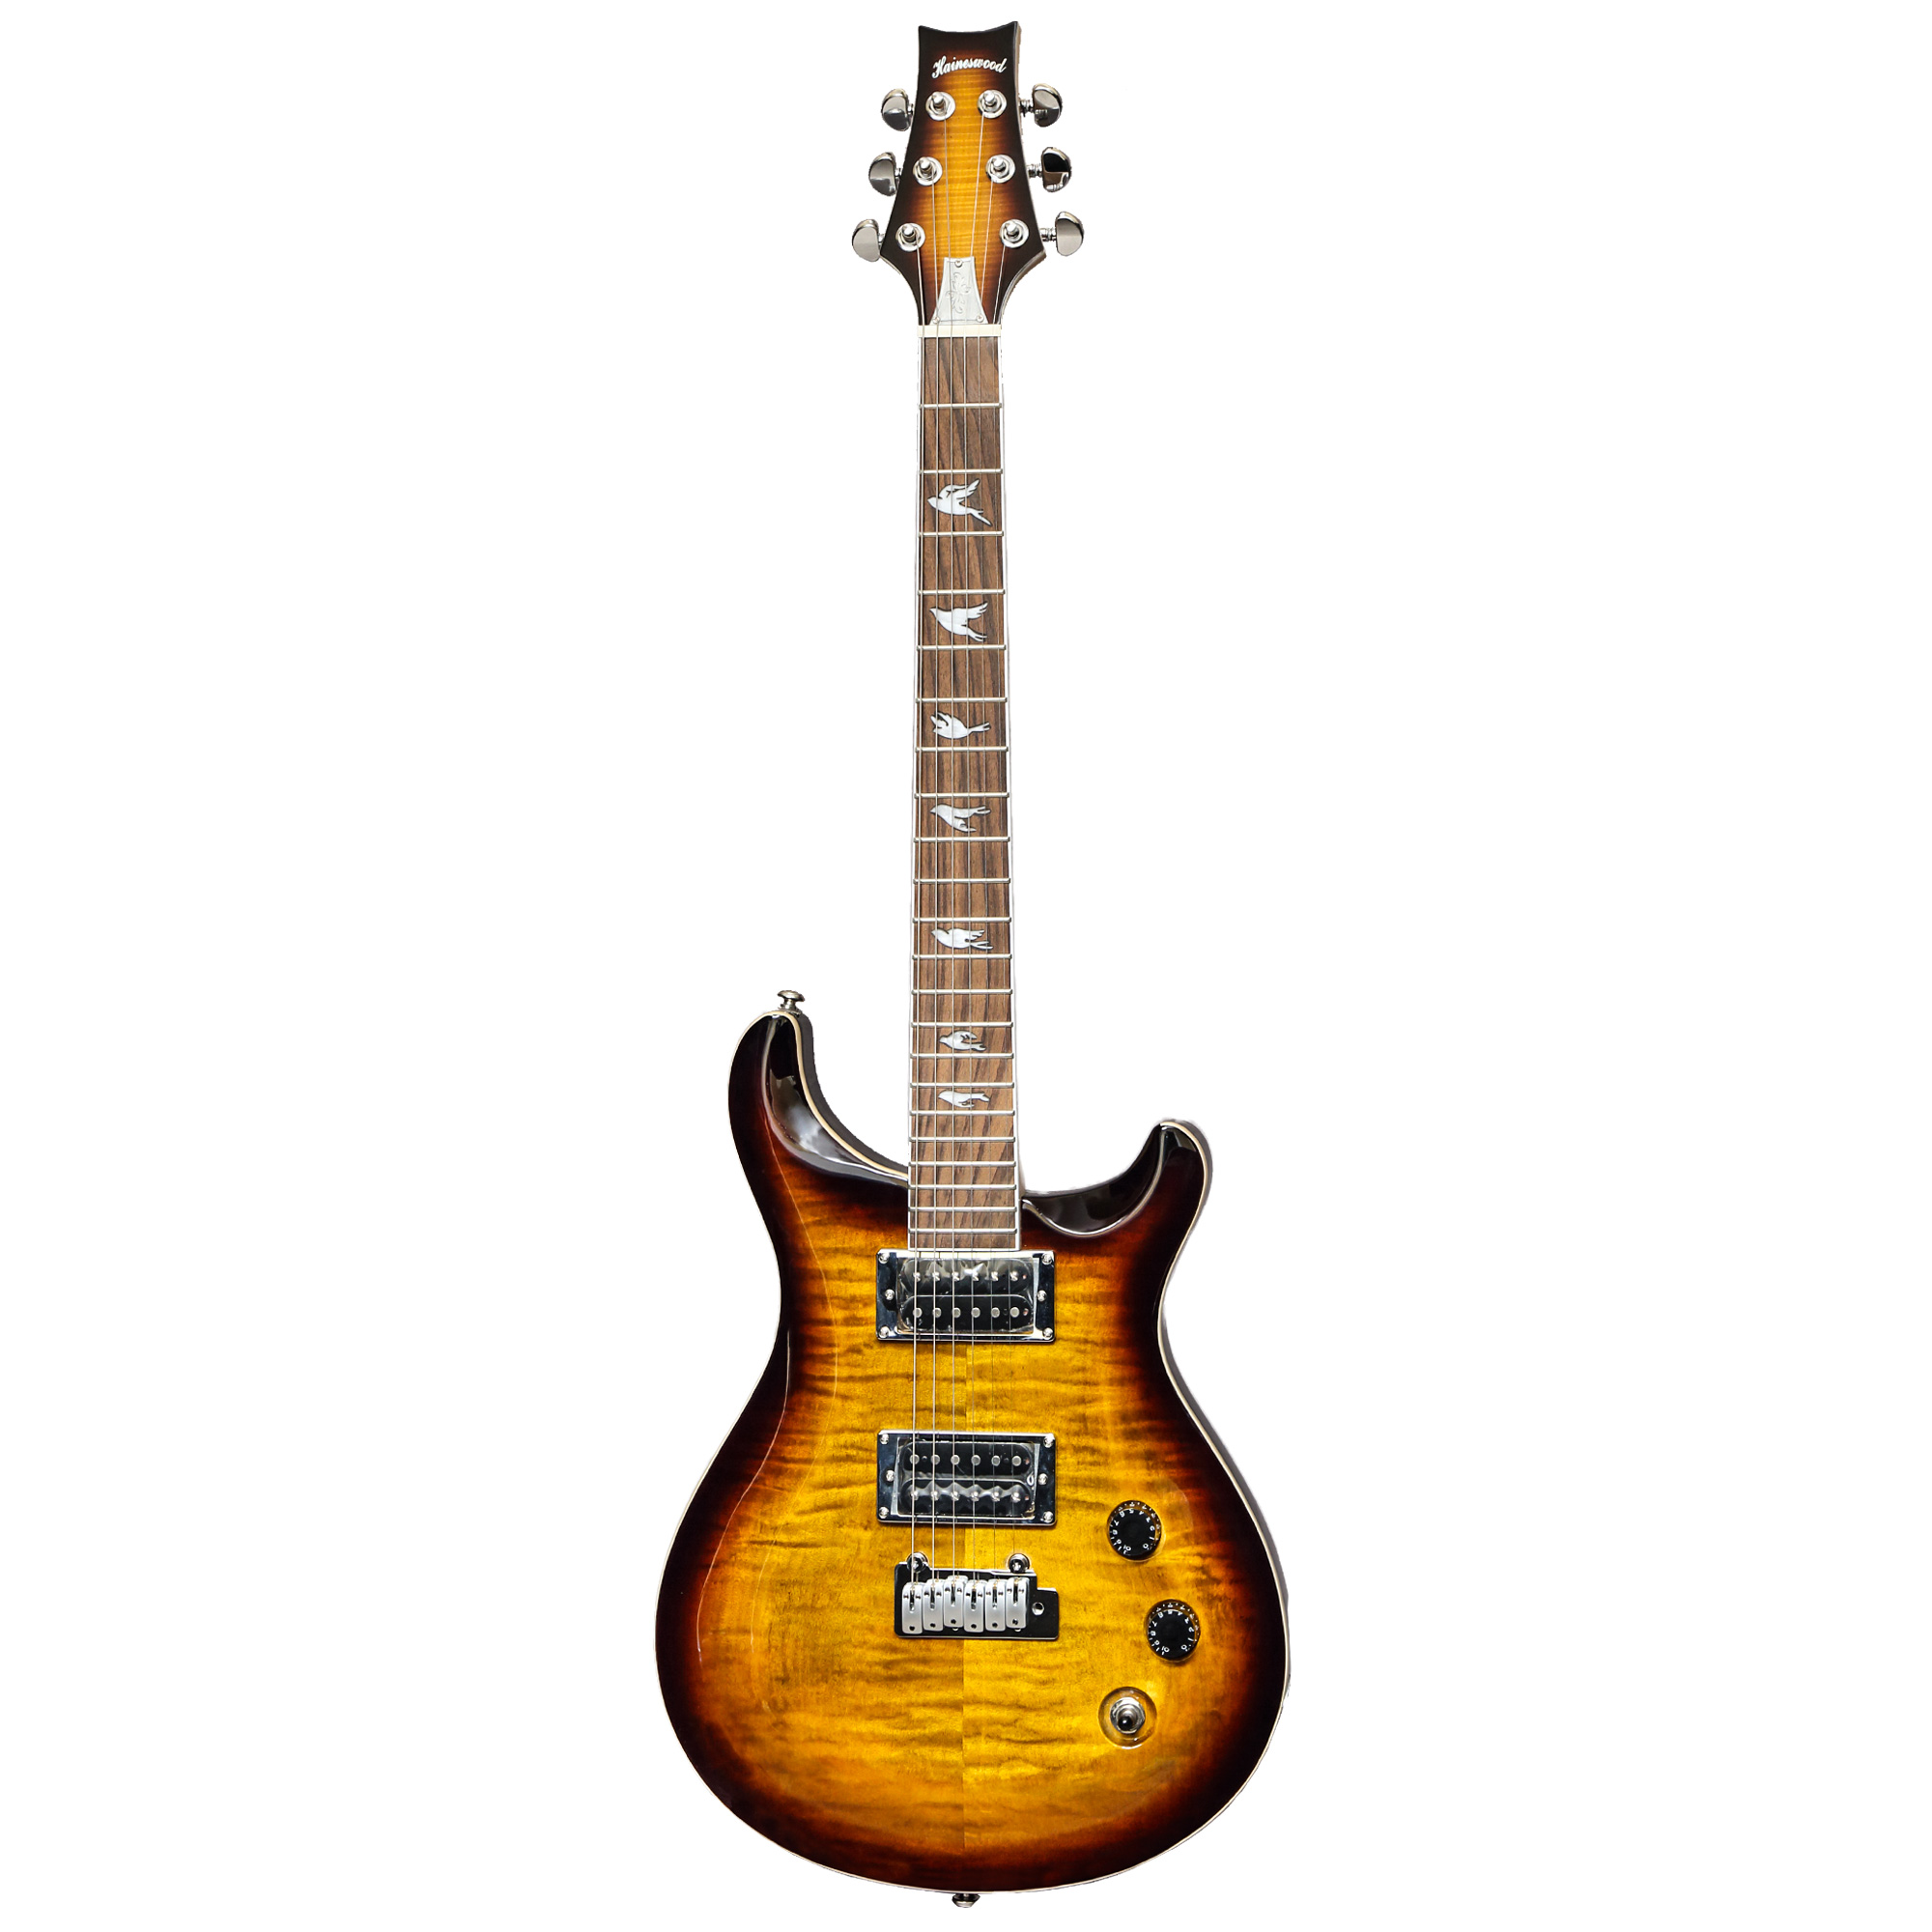 Haineswood Artist Series H-DK200VS Electric Guitar (Tiger Eye)